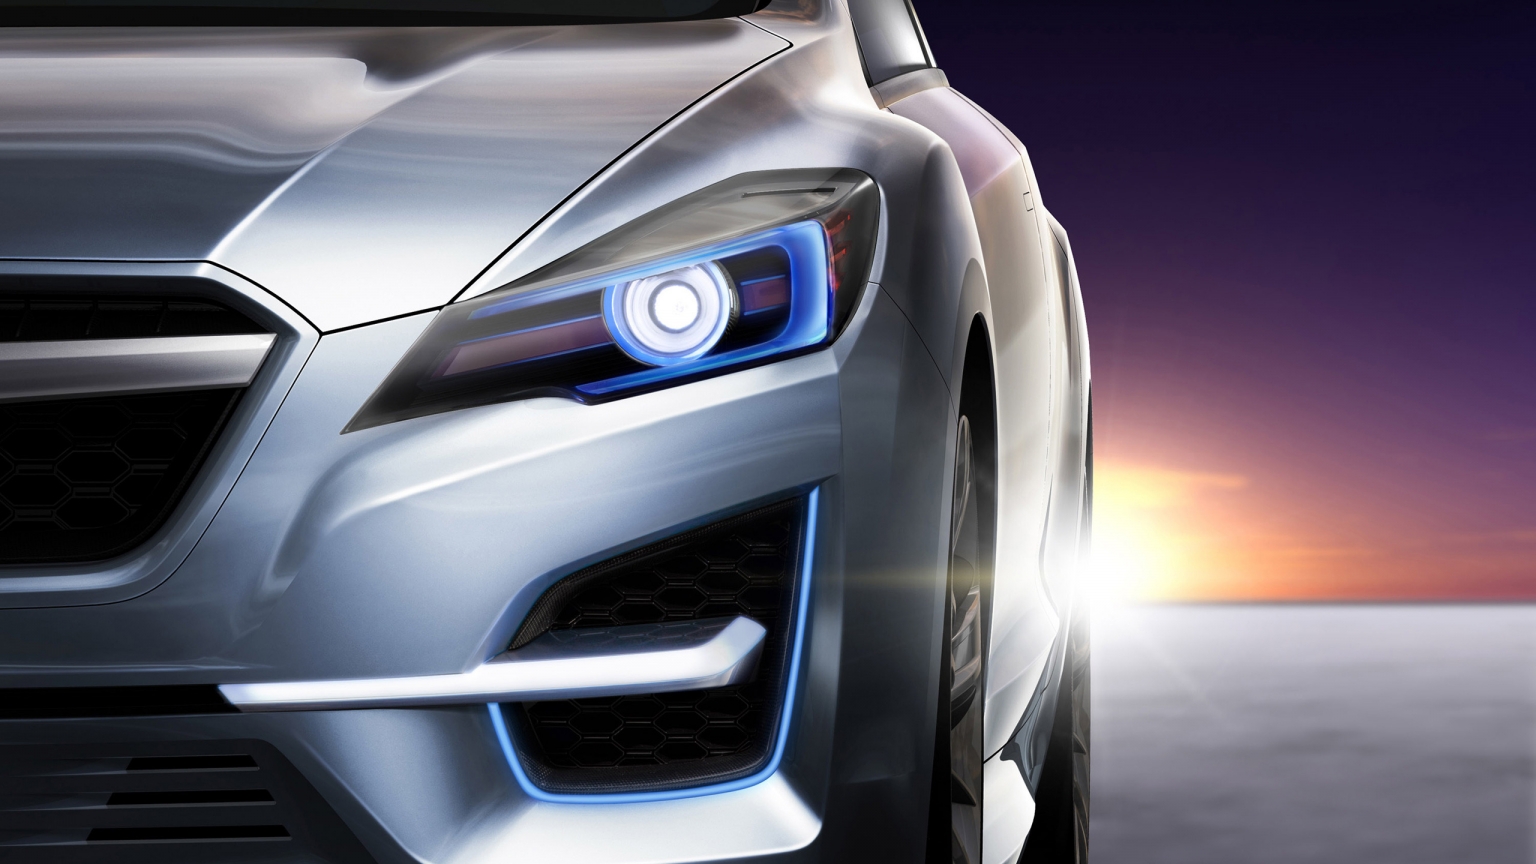 Subaru Impreza Concept headlight for 1536 x 864 HDTV resolution